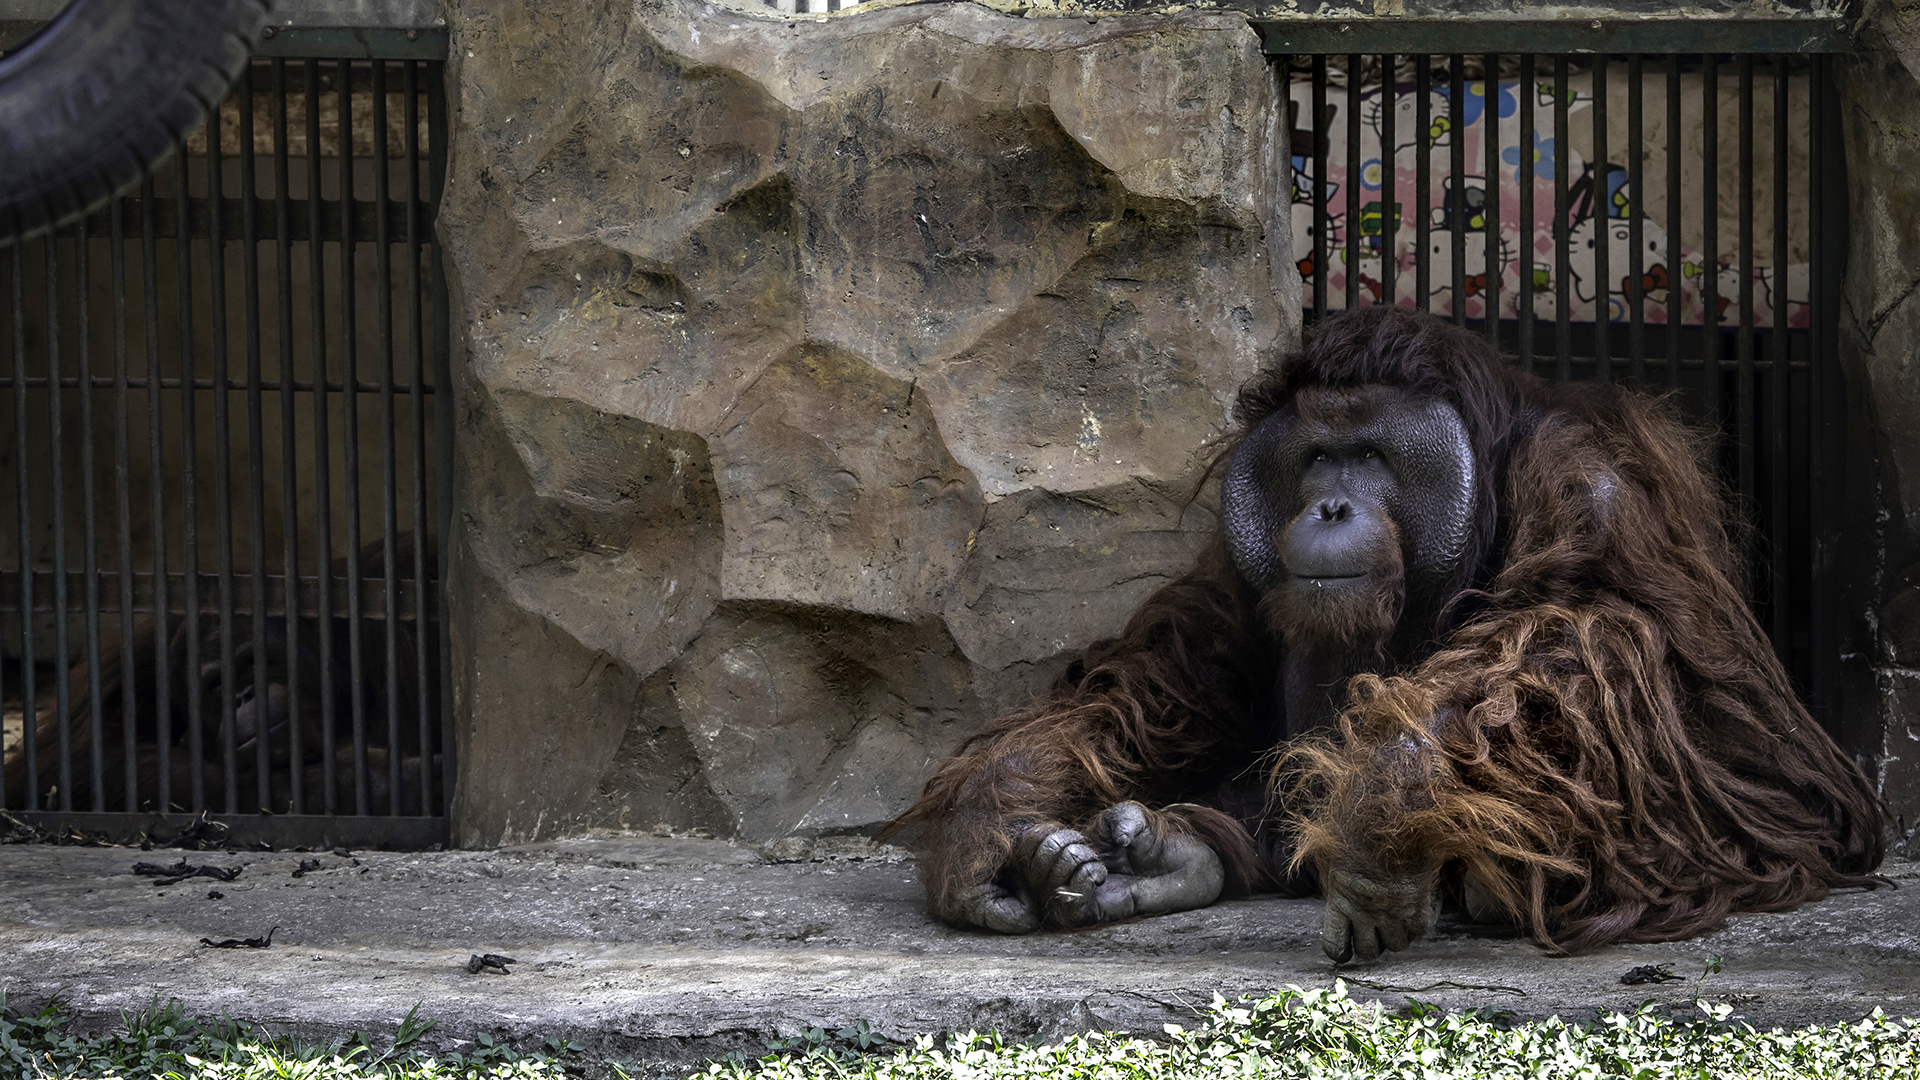 An orangutan sits on the floor of a zoo enclosure